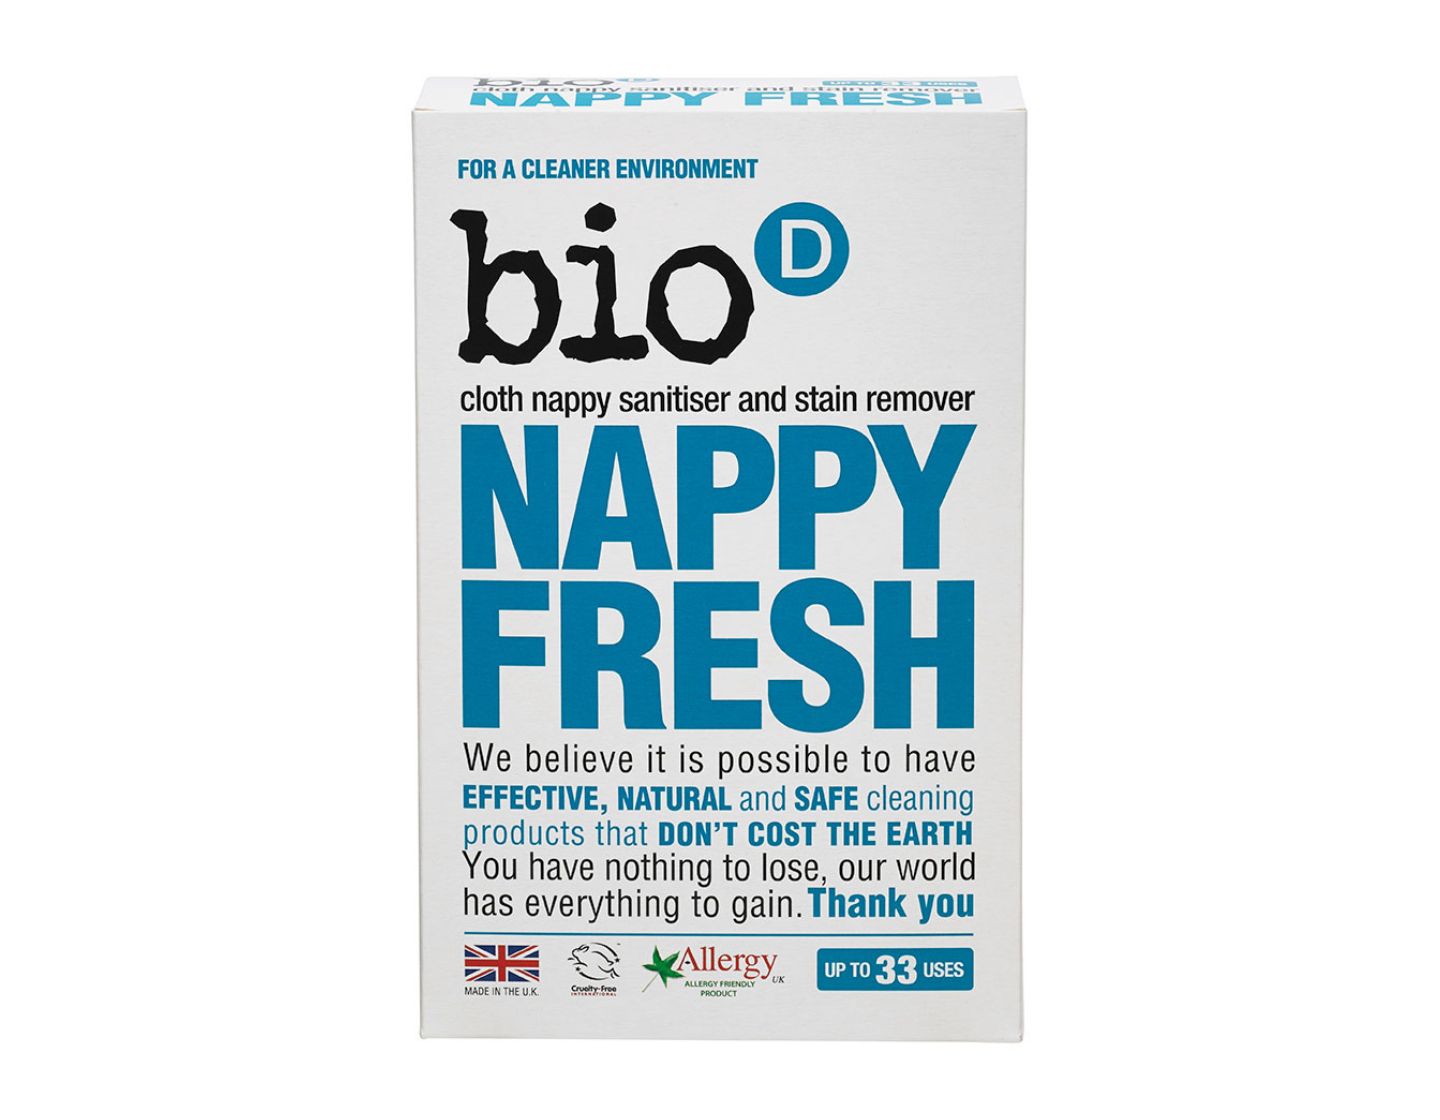 biod-nappy-fresh-1440-x-1120